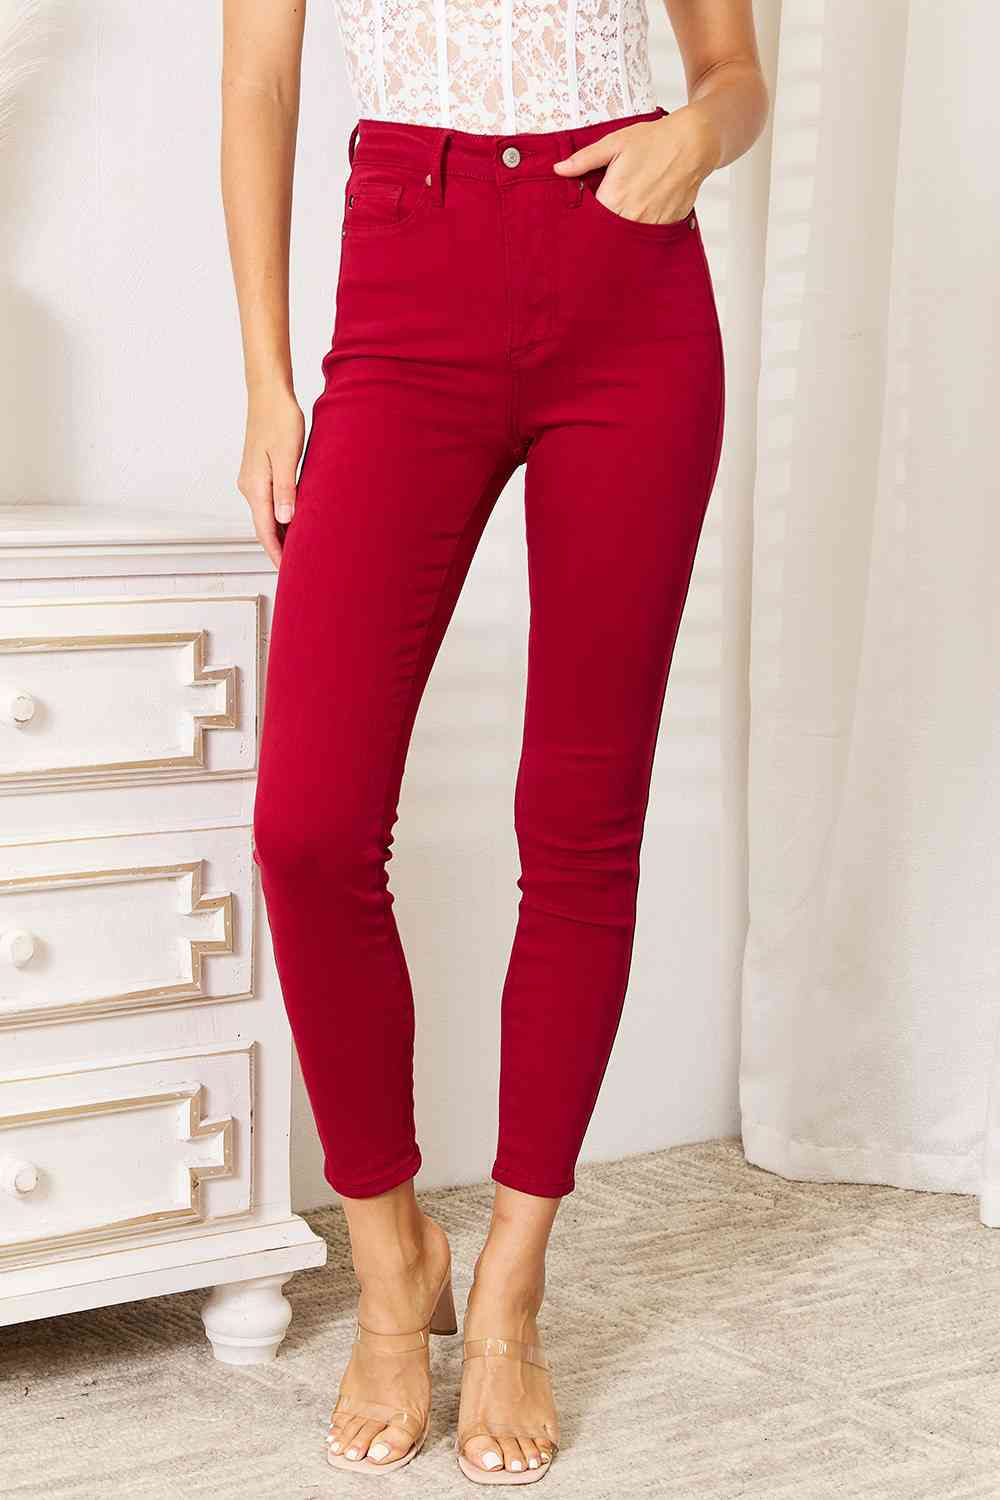 Judy Blue Full Size High Waist Tummy Control Skinny Jeans - Scarlett's Riverside Boutique 